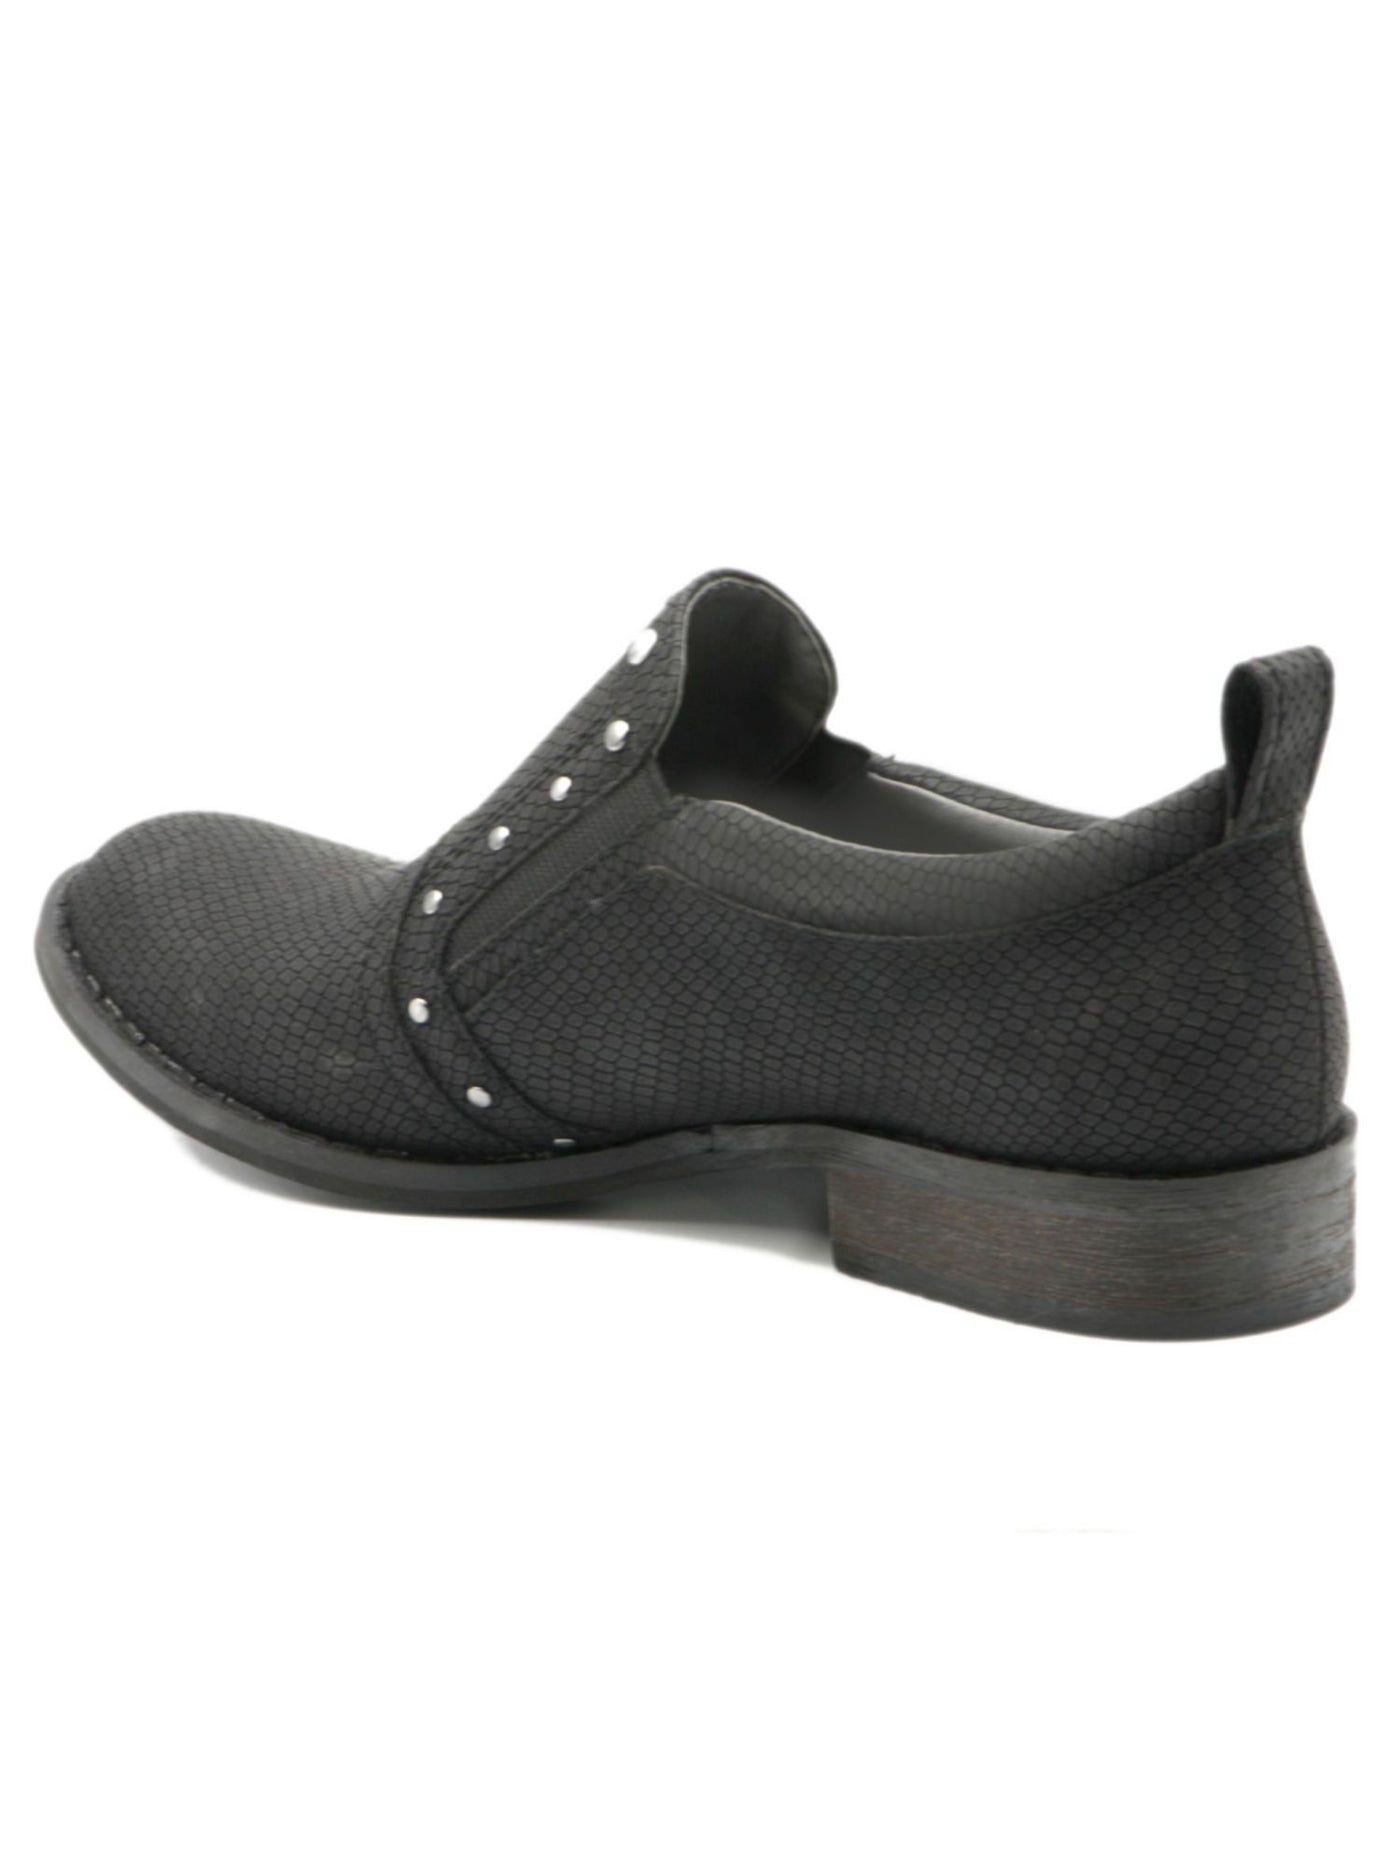 MOOTSIES TOOTSIES Womens Gray Stretch Padded Studded Kira Round Toe Slip On Flats Shoes